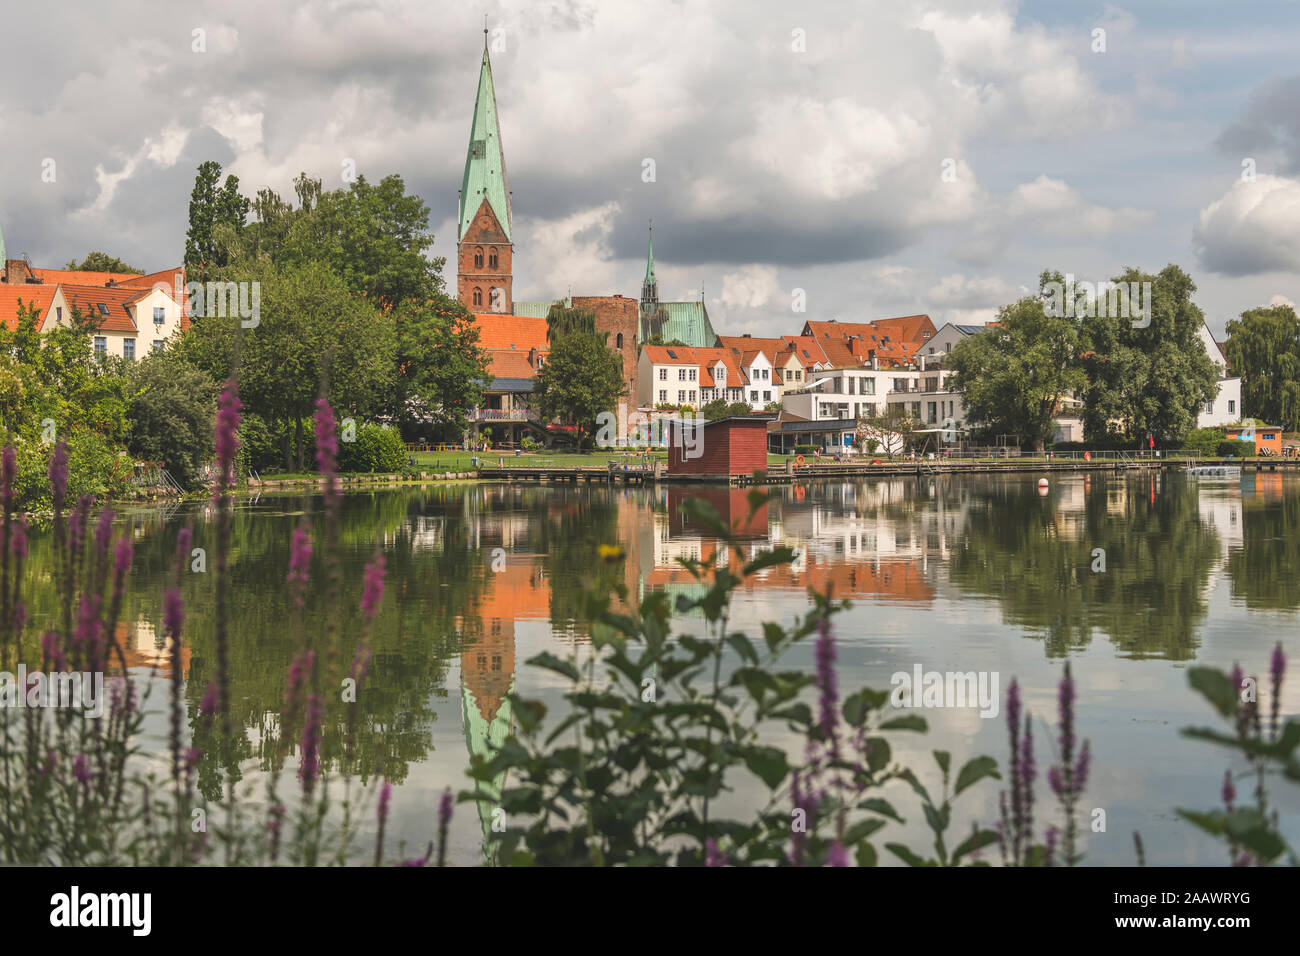 Houses and St. Aegidien-Kirche by Krähenteich lake against cloudy sky in Lübeck, Germany Stock Photo